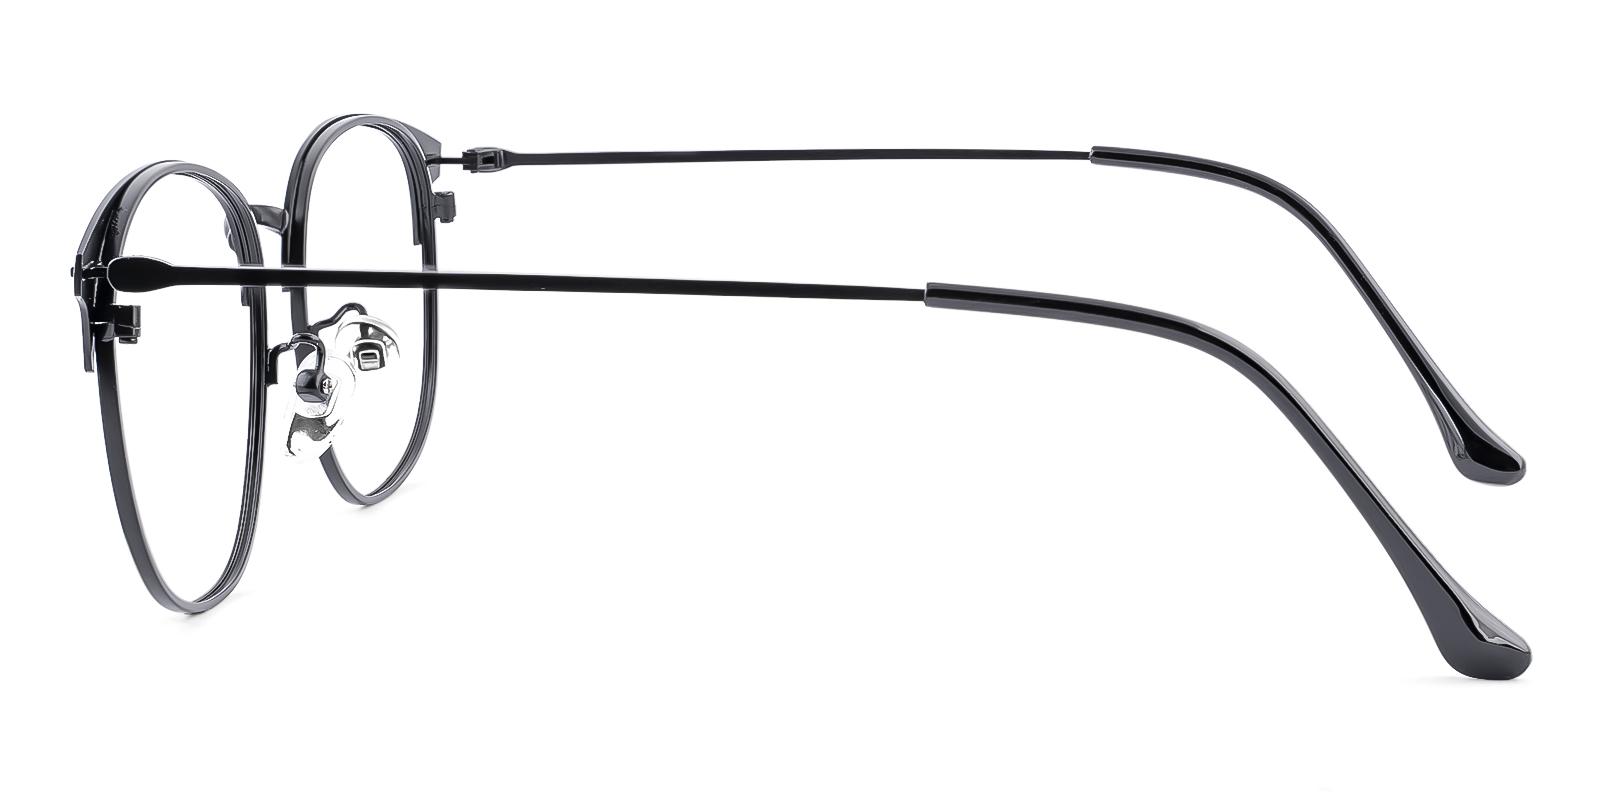 Curvid Black Metal Eyeglasses , NosePads Frames from ABBE Glasses